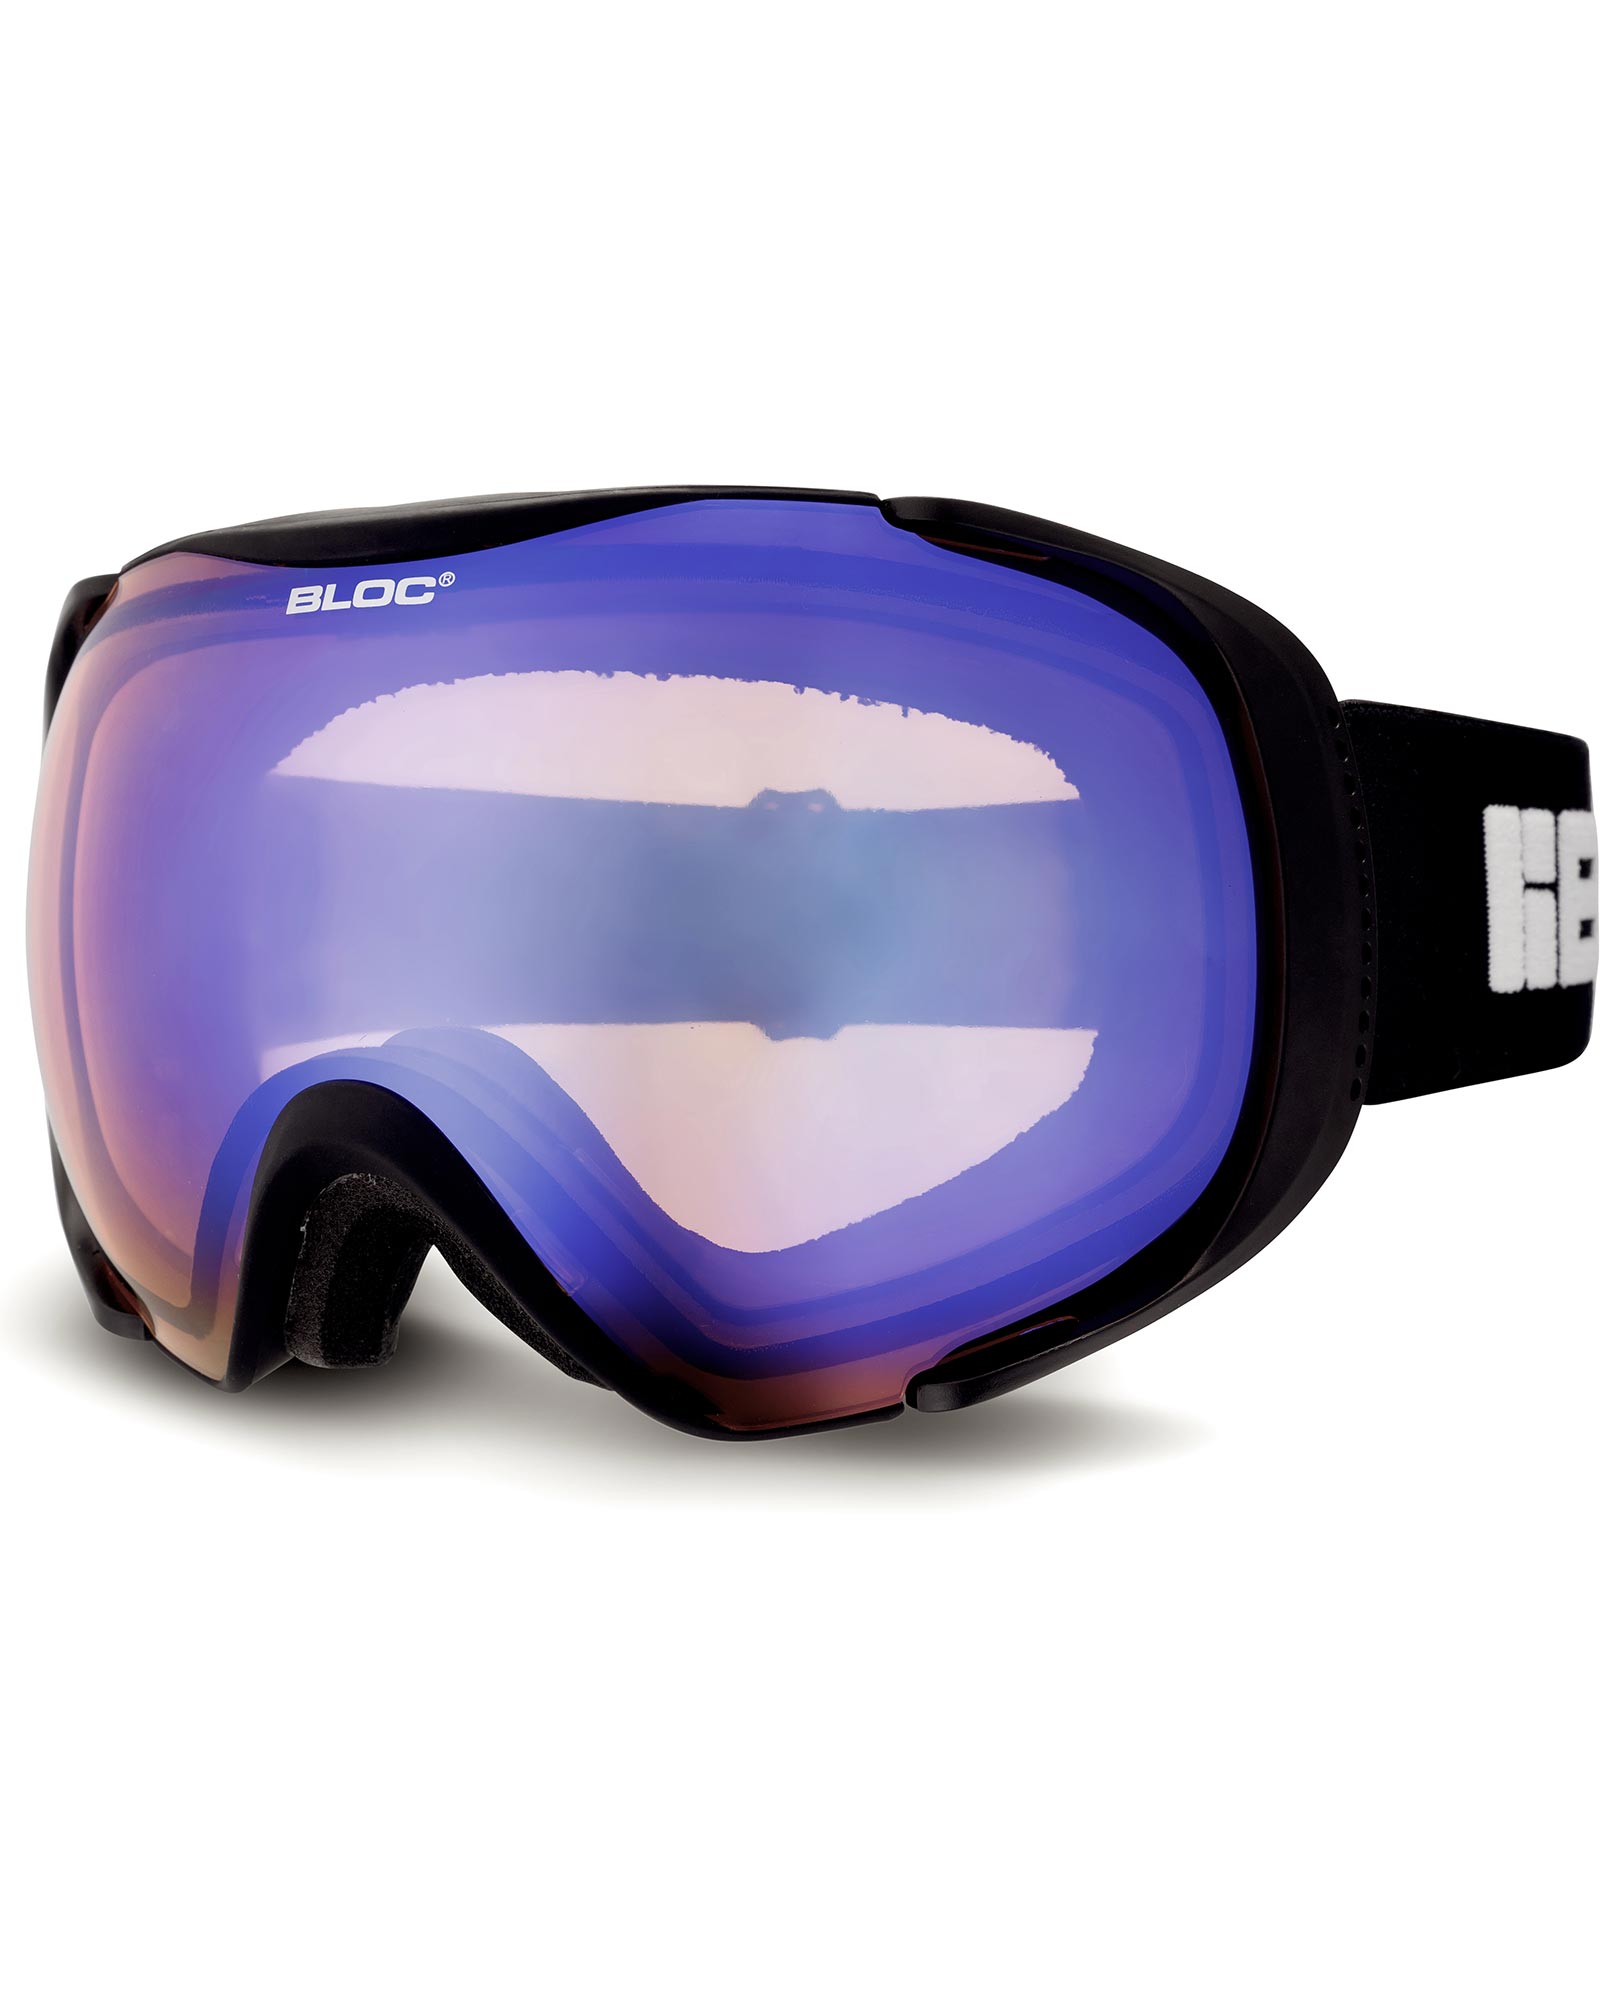 Bloc Mask OTG Matte Black / Brown Blue Mirror Goggles - Matte Black